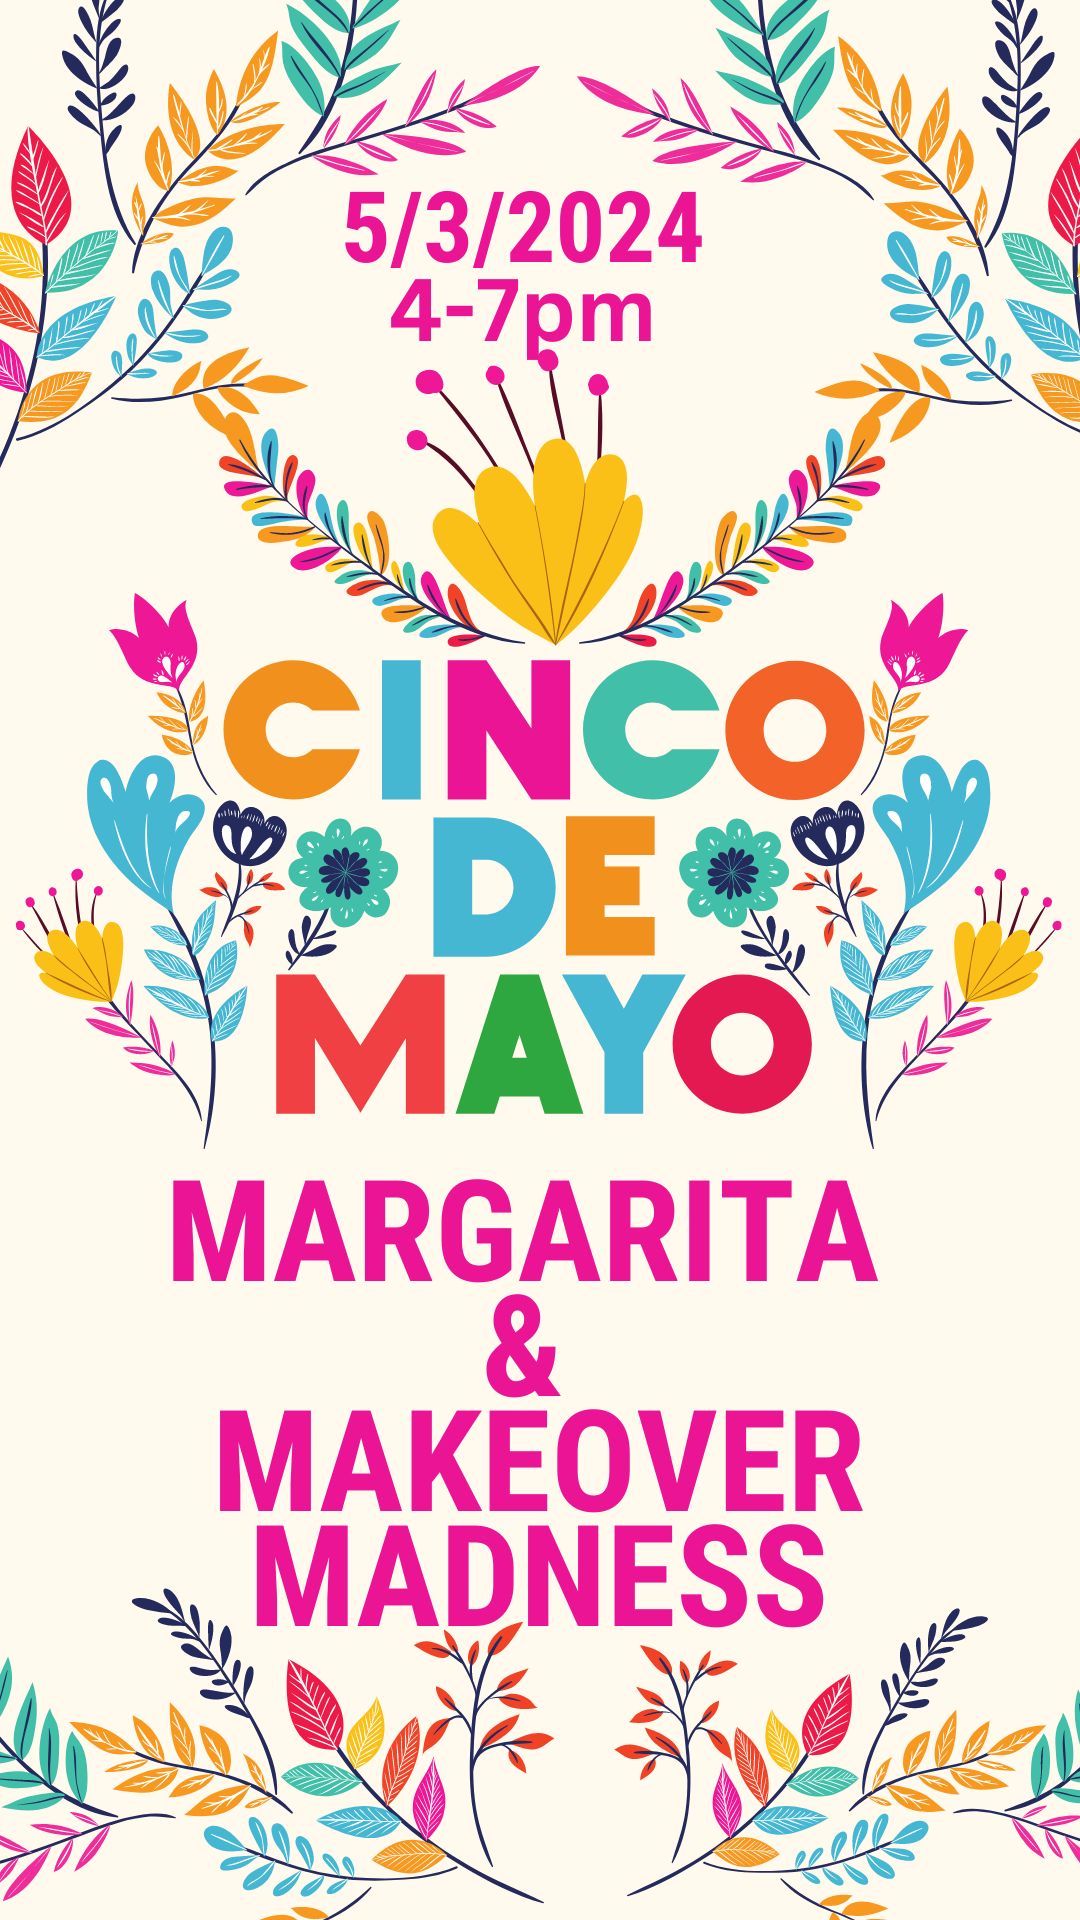 Margarita & Makeover Madness